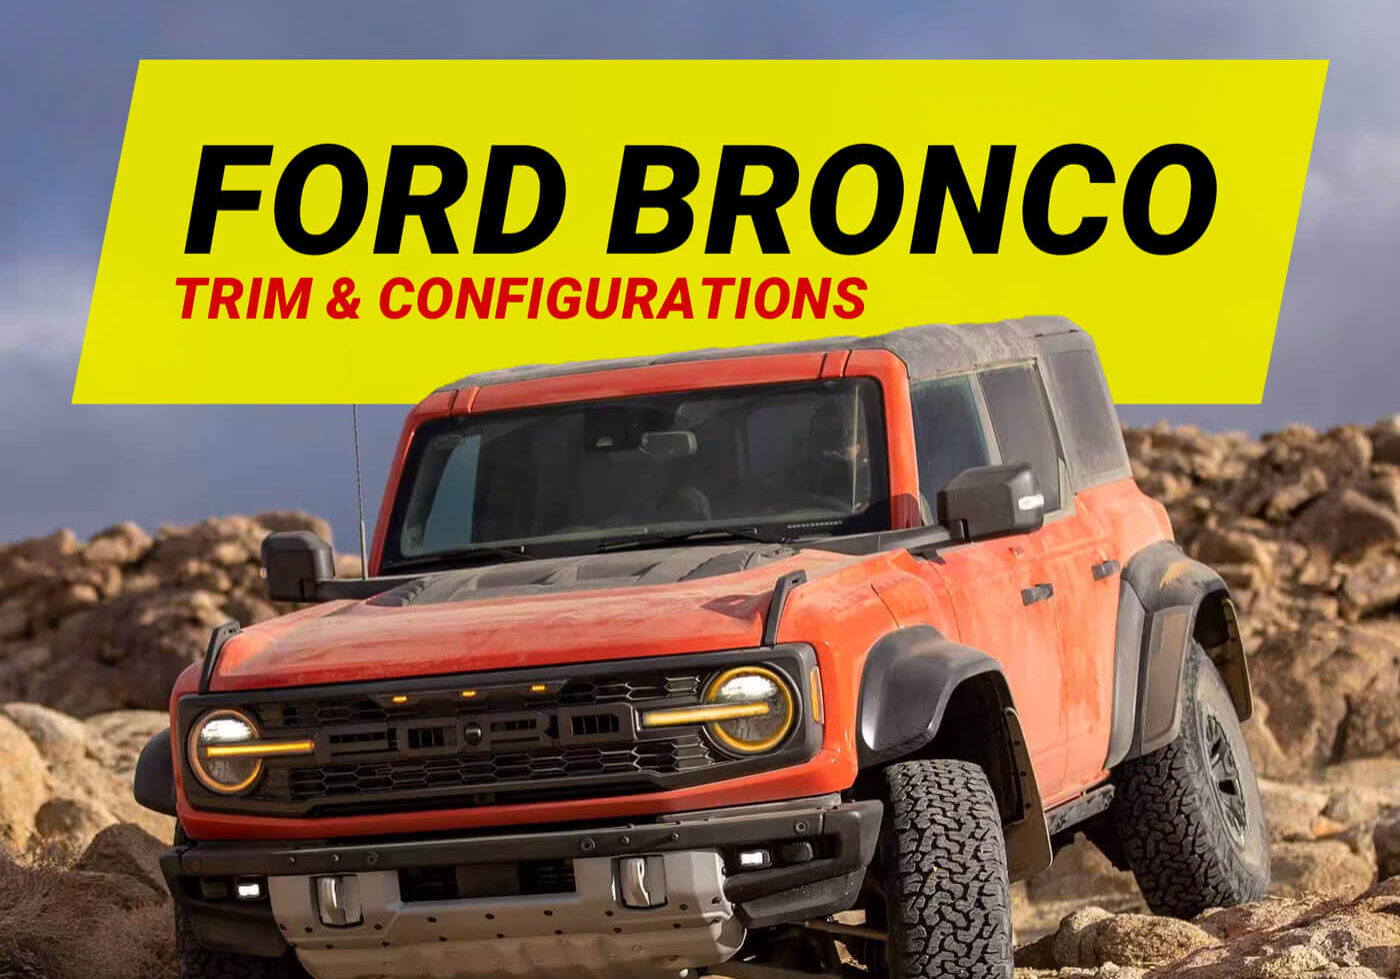 Ford Bronco Trim & Configurations